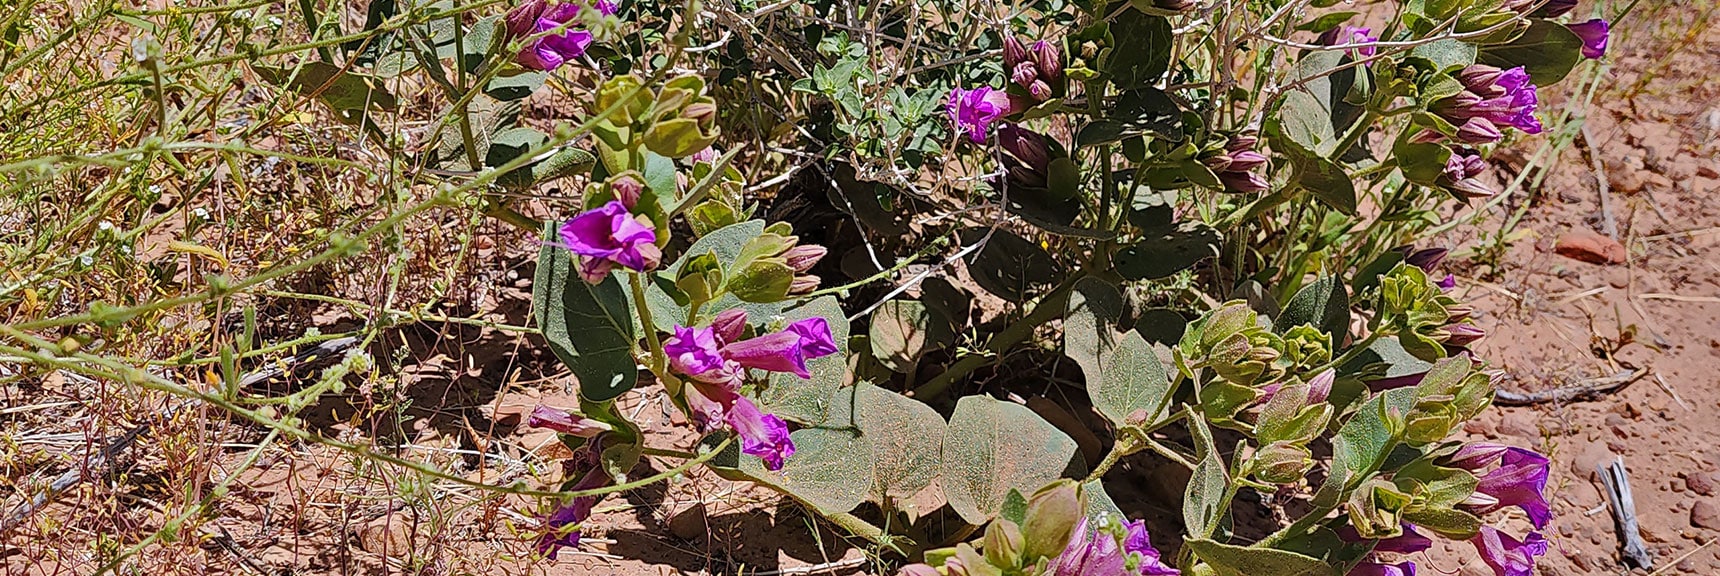 Pediomelum Castoreum or Pediomelum Megalanthum : Annual Mojave Desert Wildflowers | Juniper Canyon | Red Rock Canyon National Conservation Area, Nevada | David Smith | LasVegasAreaTrails.com